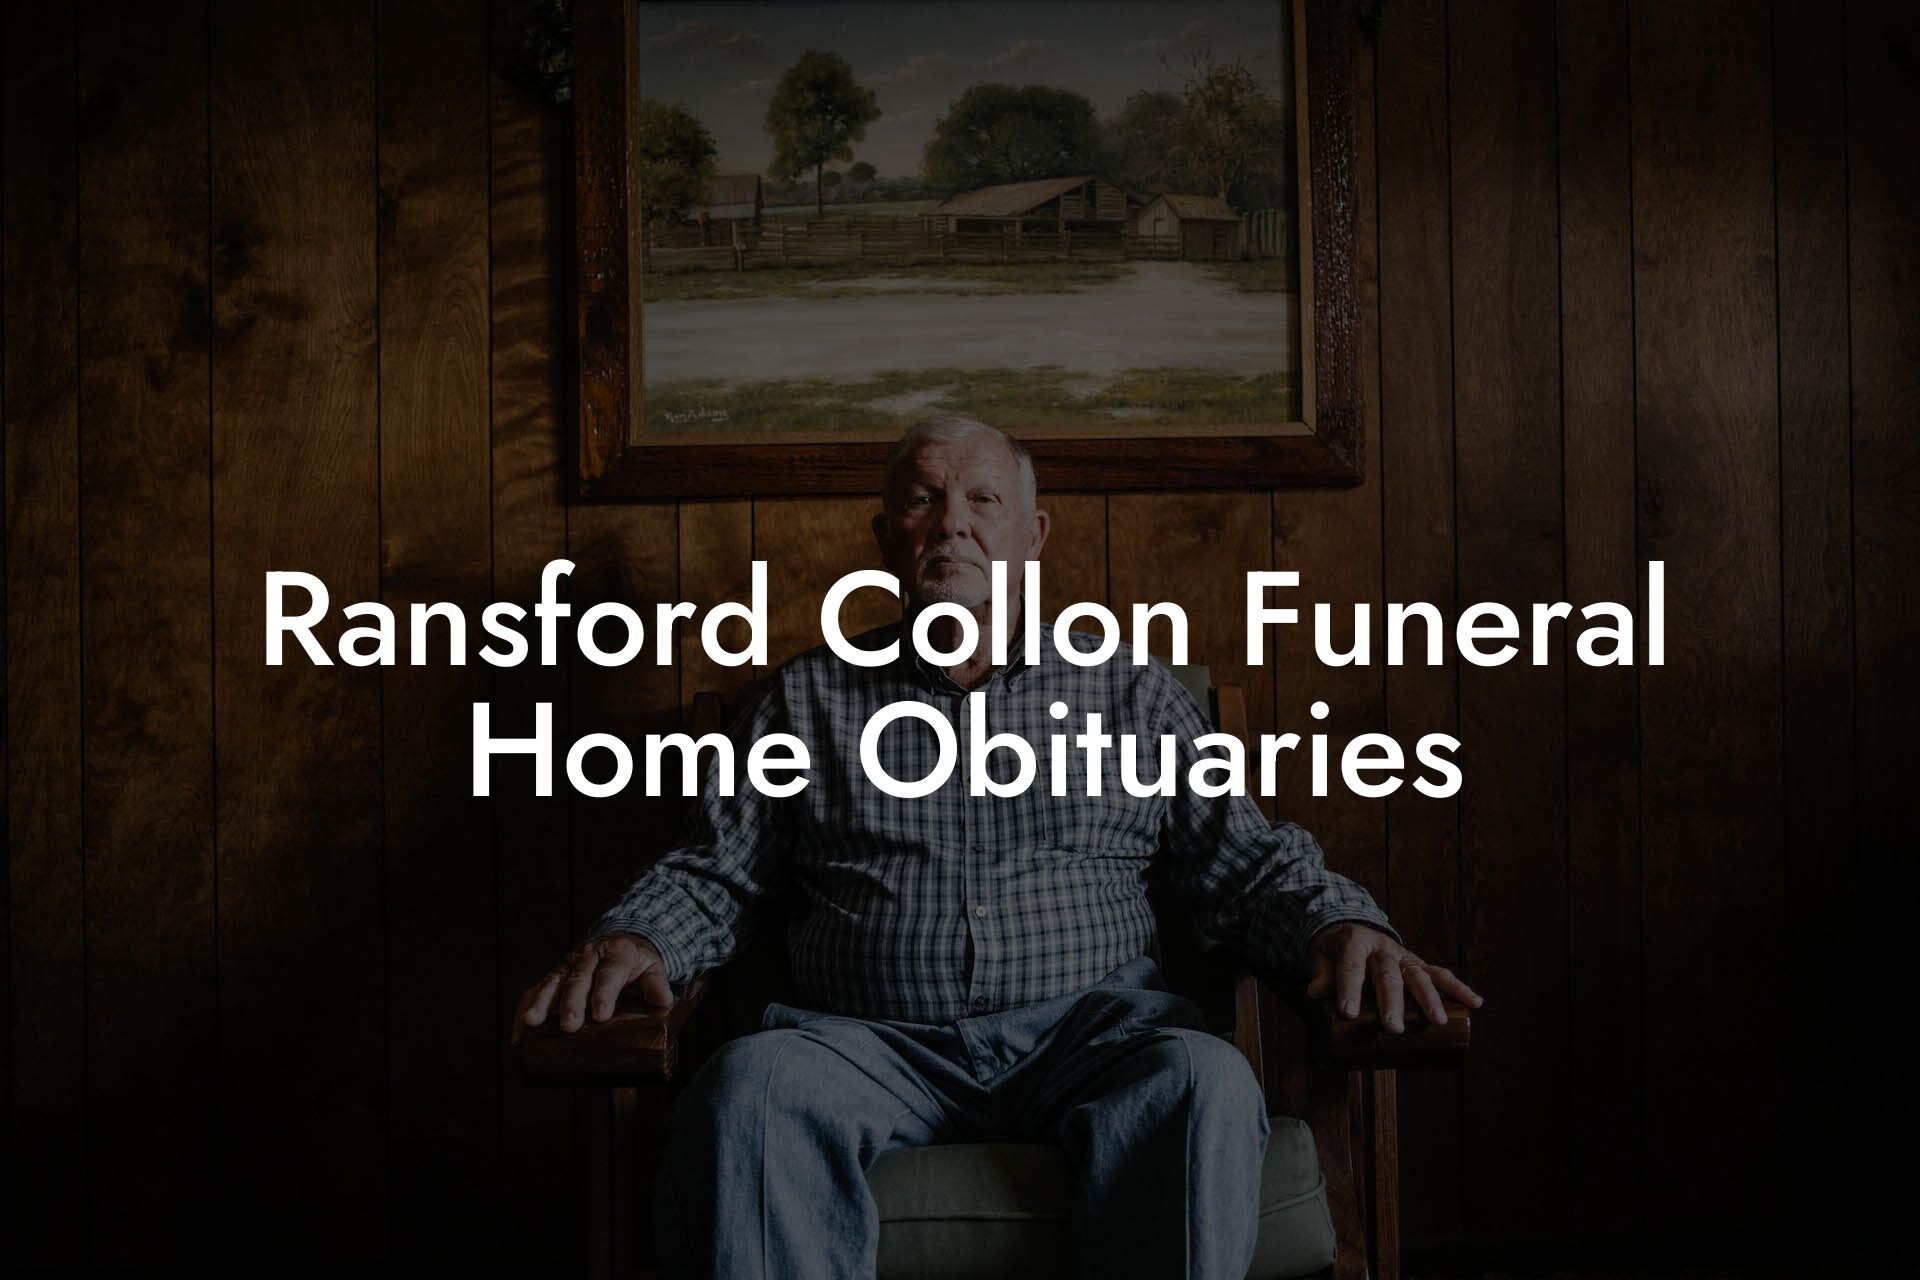 Ransford Collon Funeral Home Obituaries